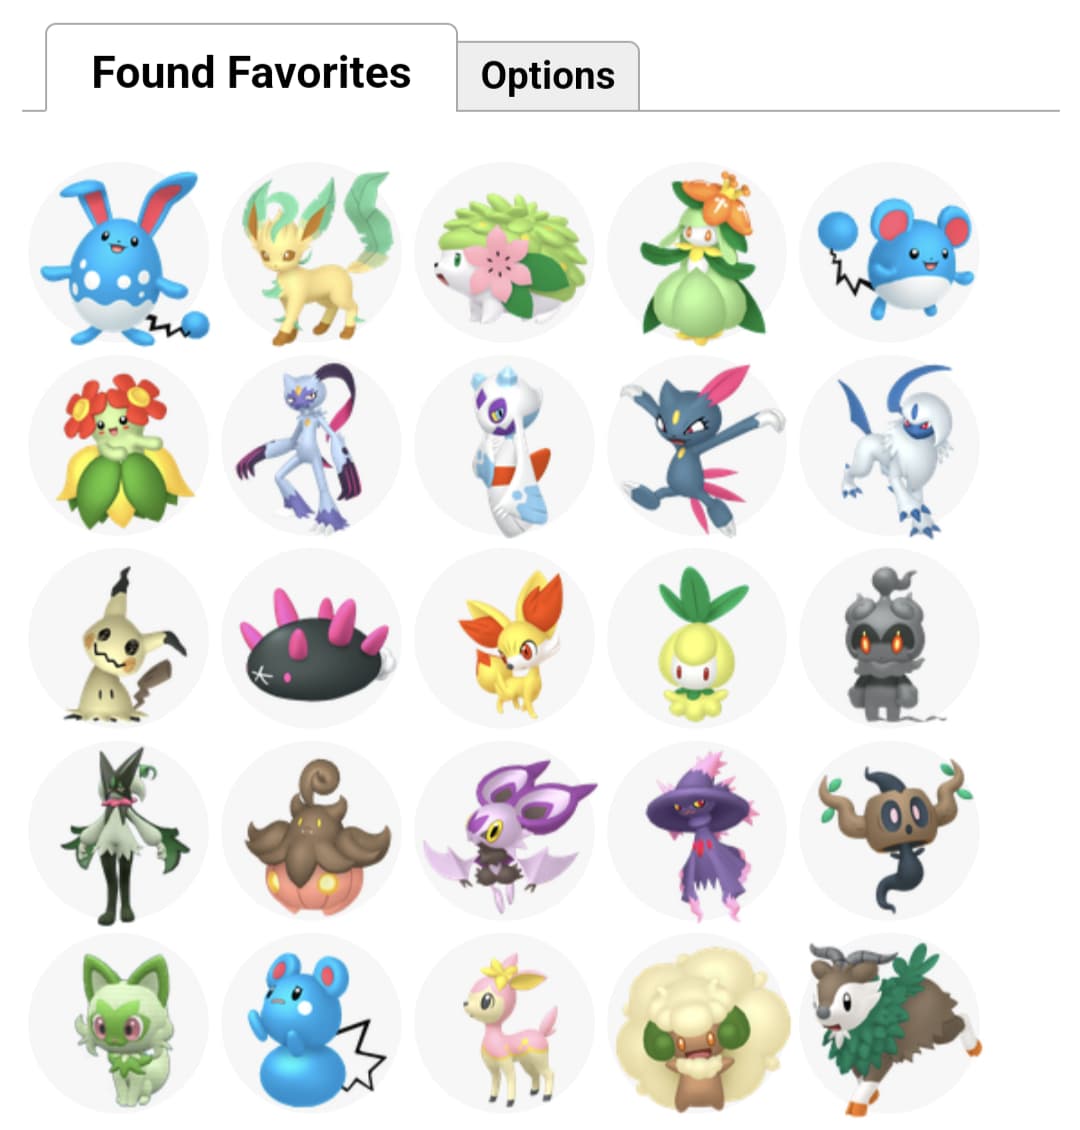 Choose your favourite Pokemon of each type! - General - Elite Fourum